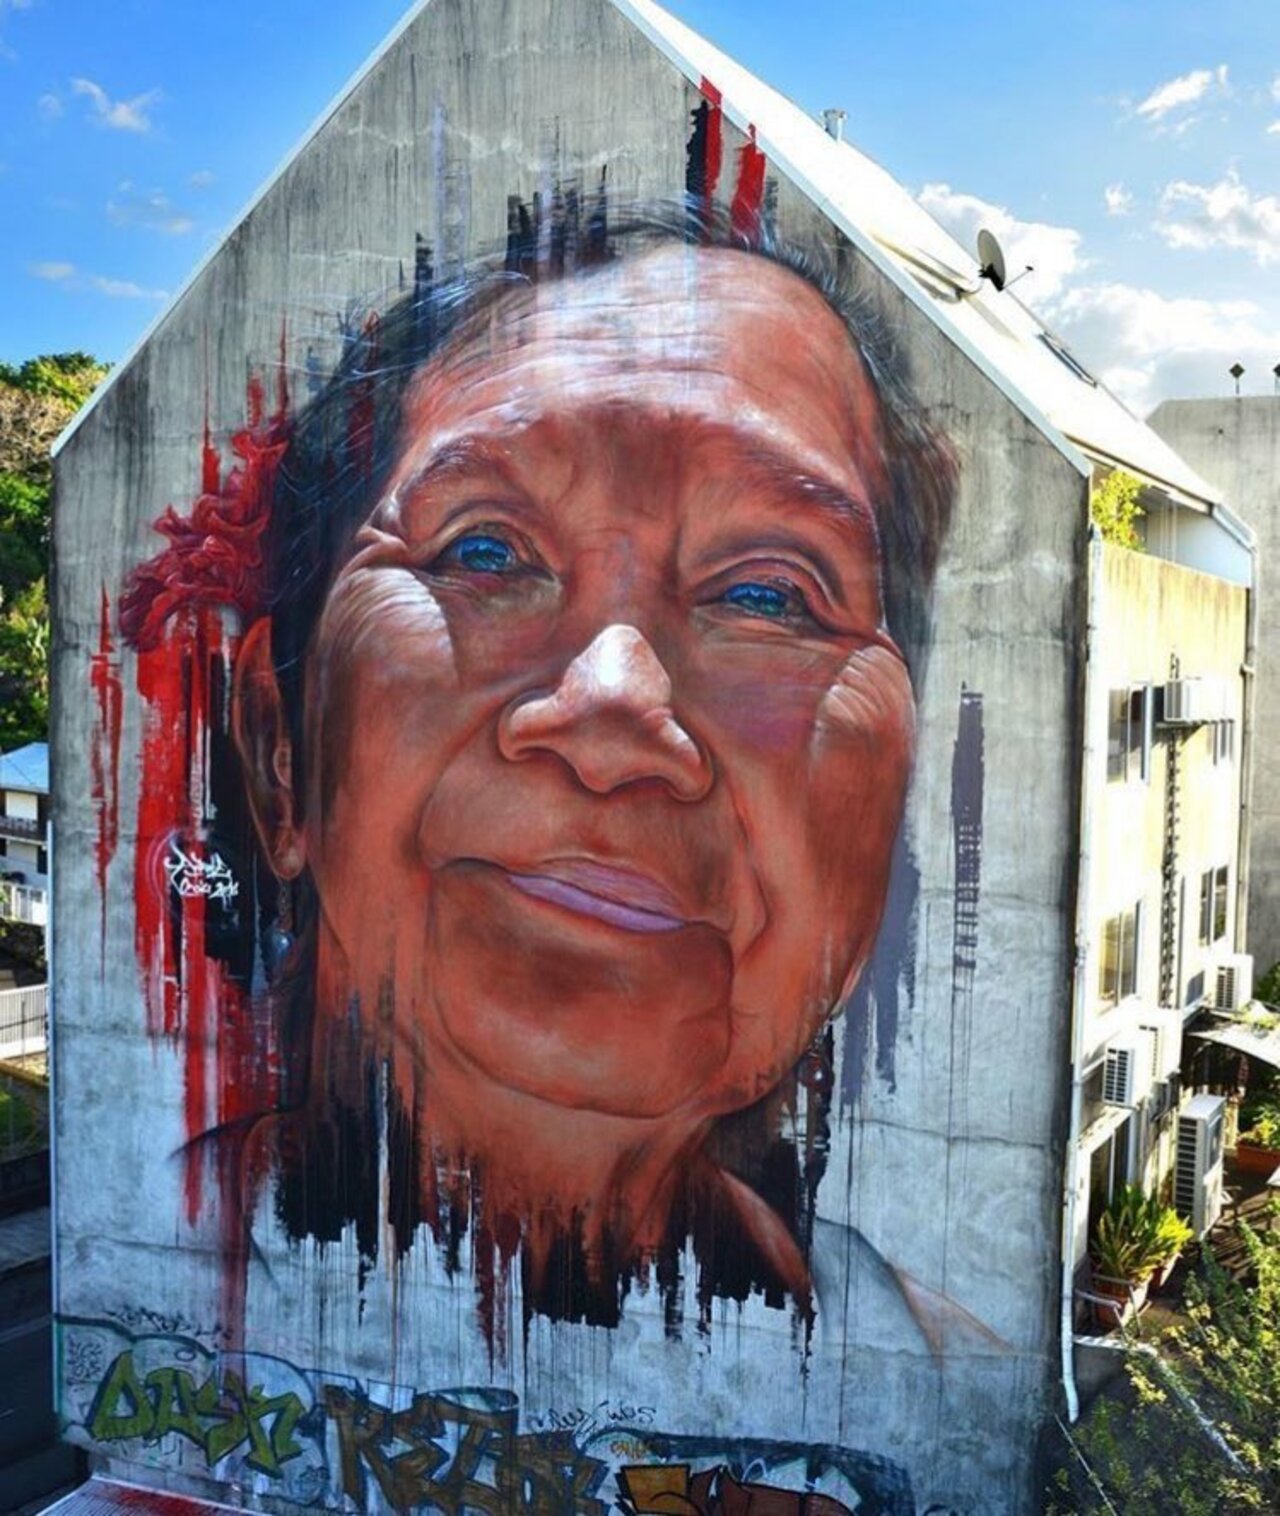 #mural by Adnate #Tahiti #art #graffiti #streetart https://t.co/RvS0p130Z0